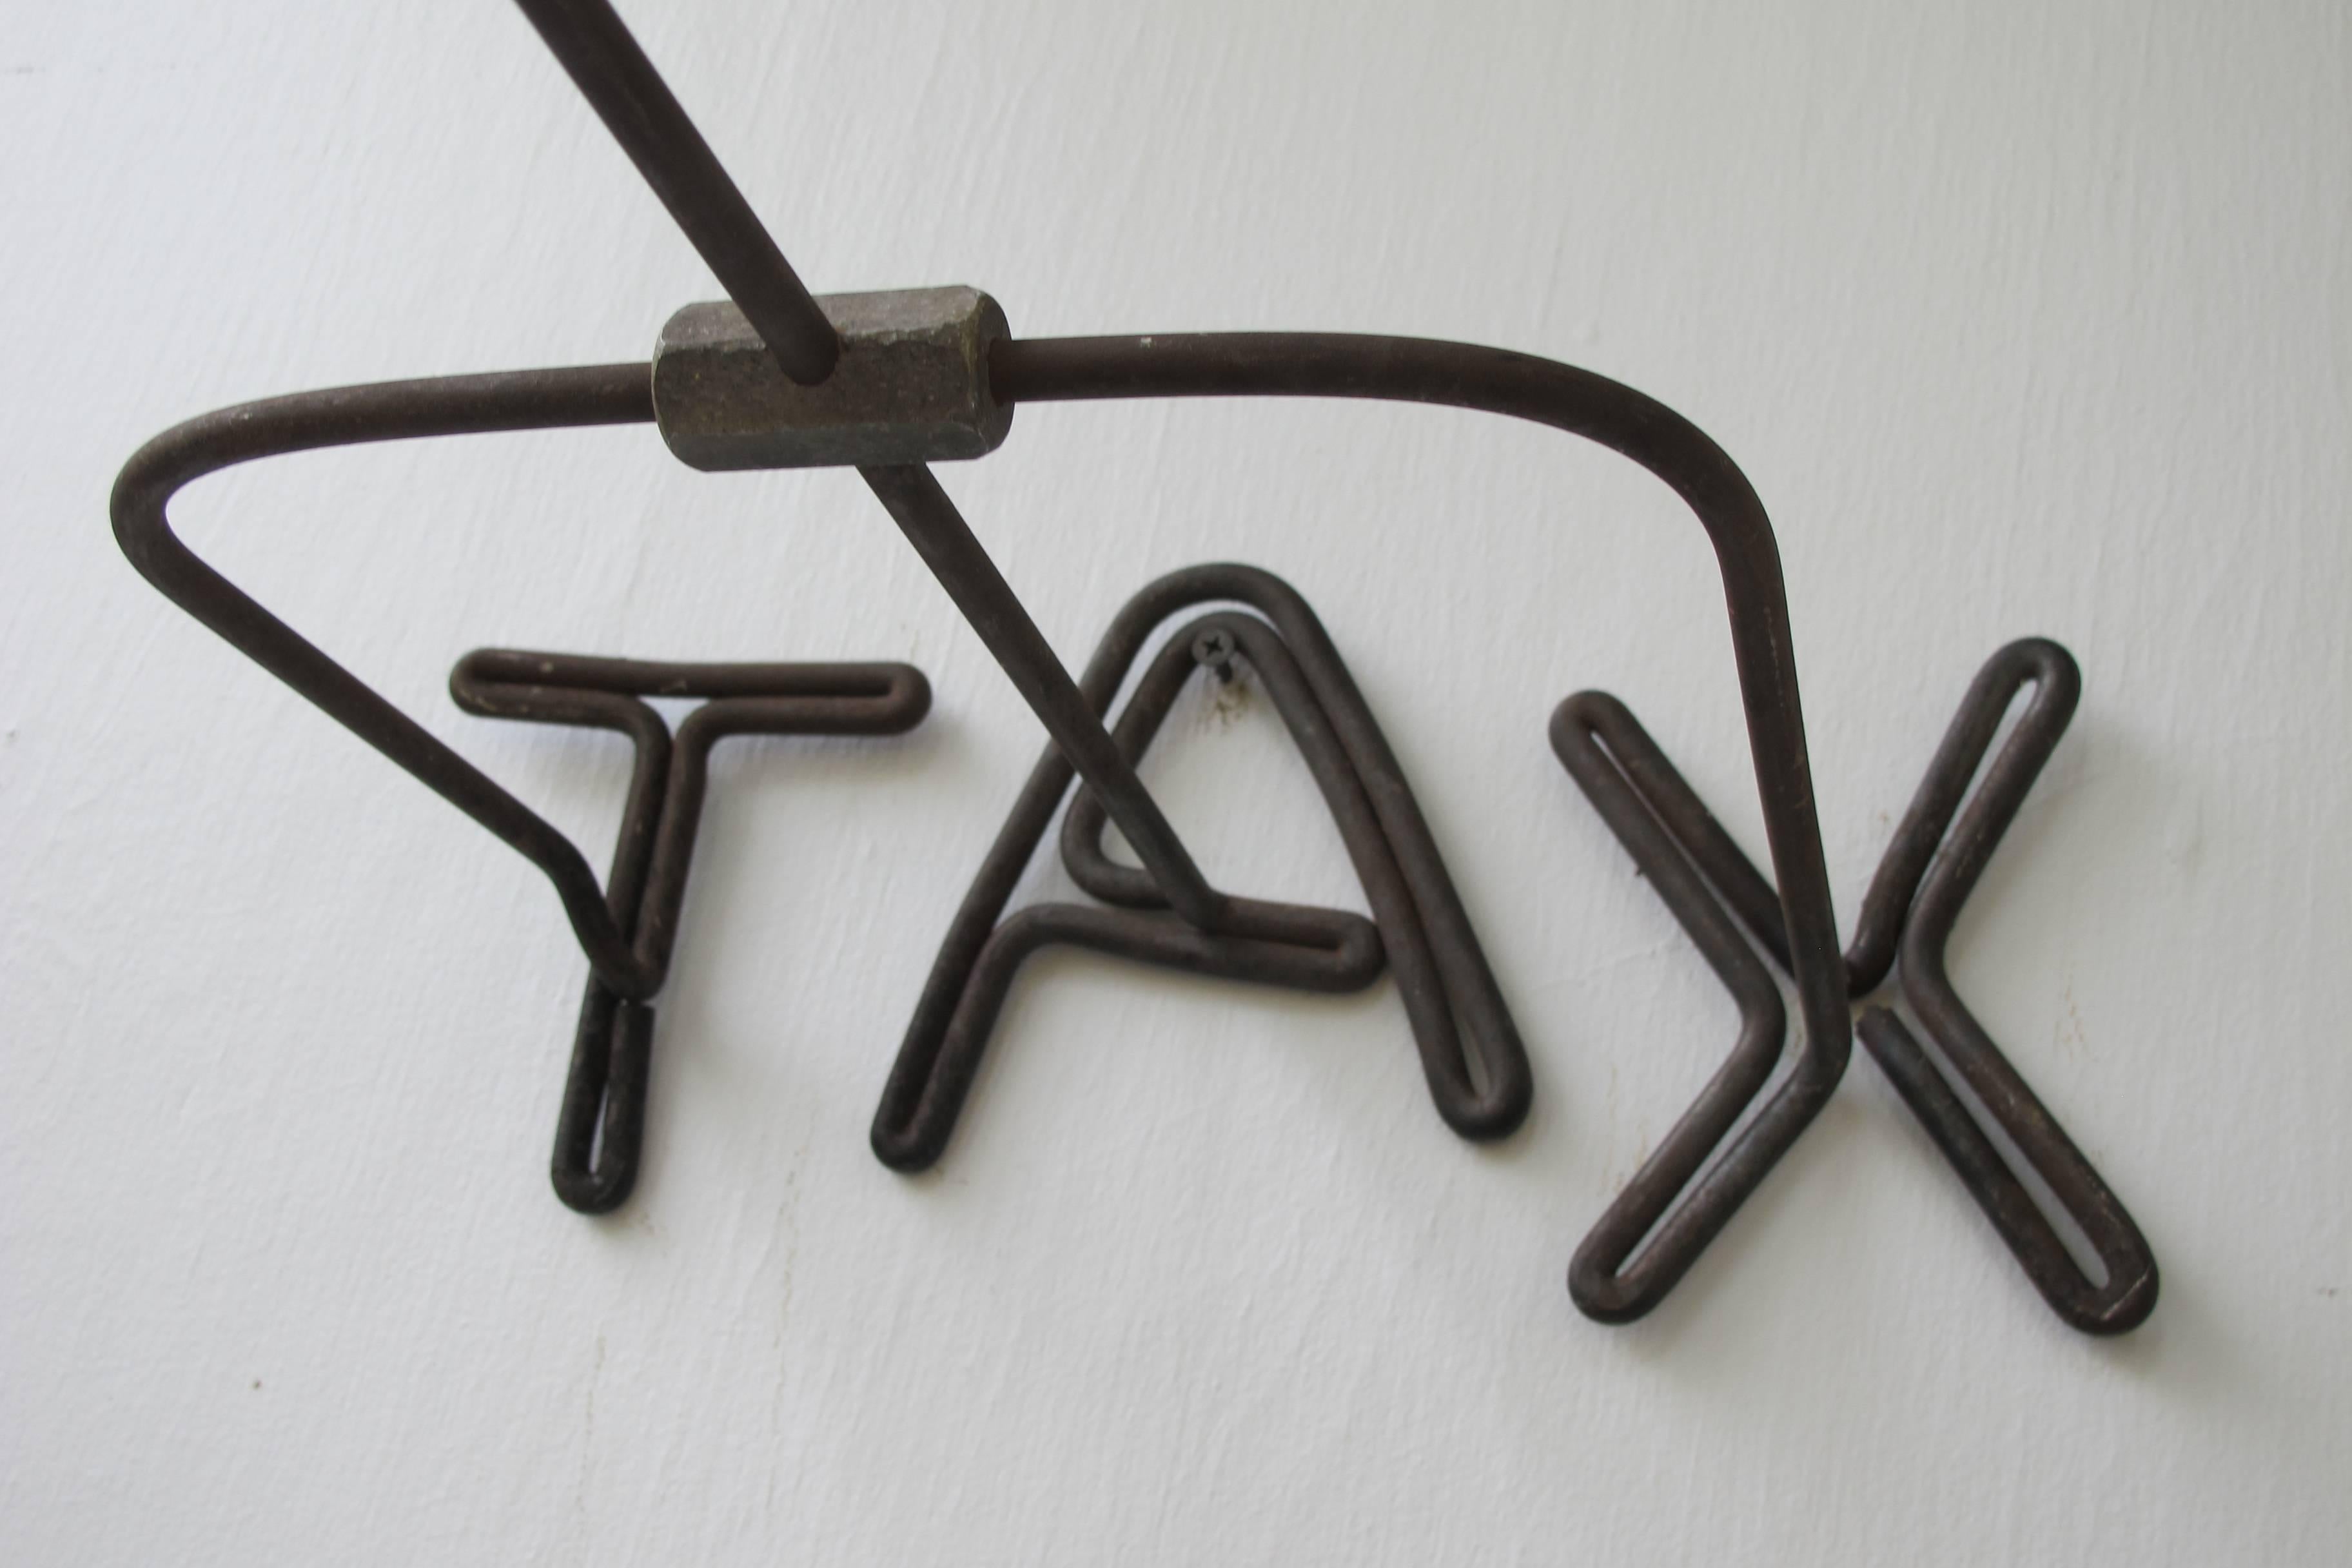 American Tax Branding Iron by Edward Nagrodzki For Sale